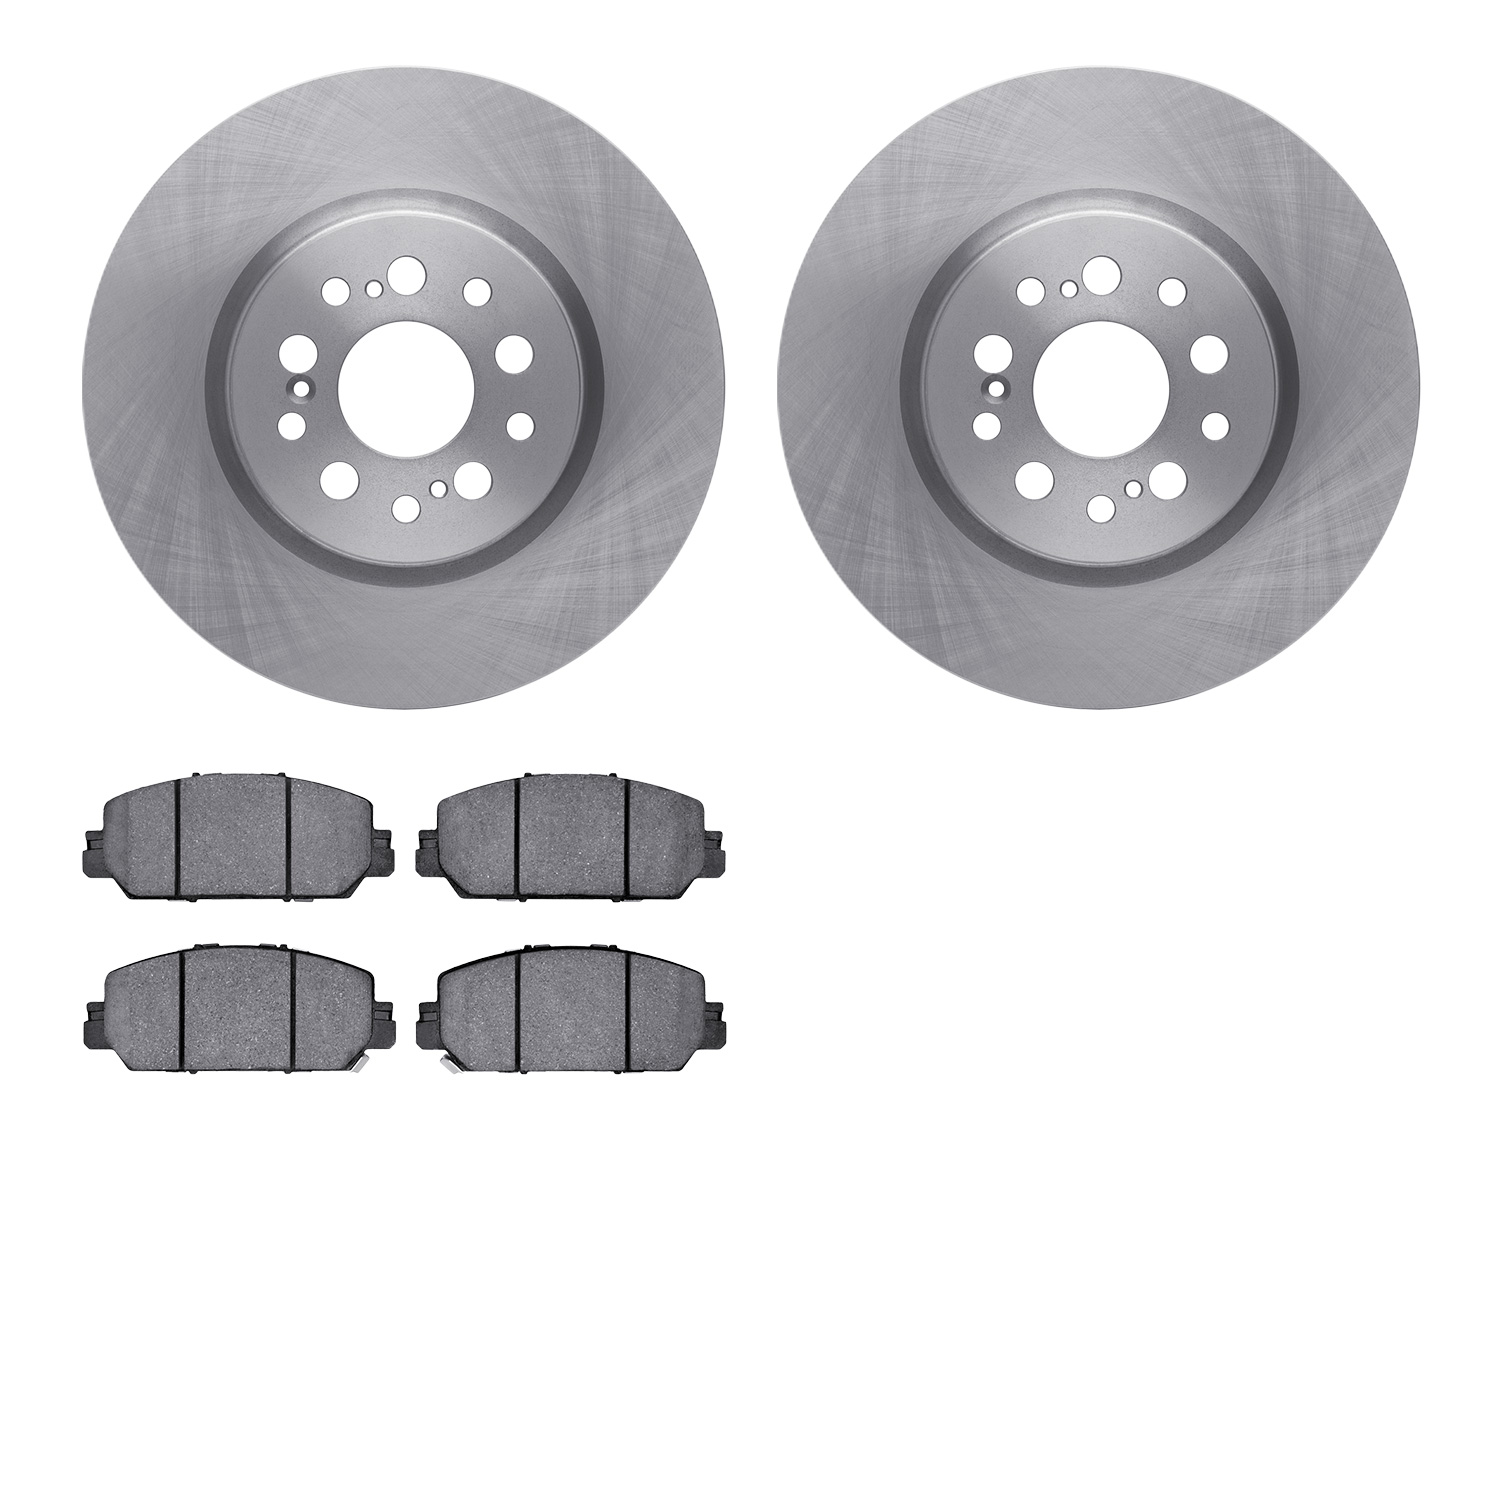 6302-59112 Brake Rotors with 3000-Series Ceramic Brake Pads Kit, Fits Select Acura/Honda, Position: Front